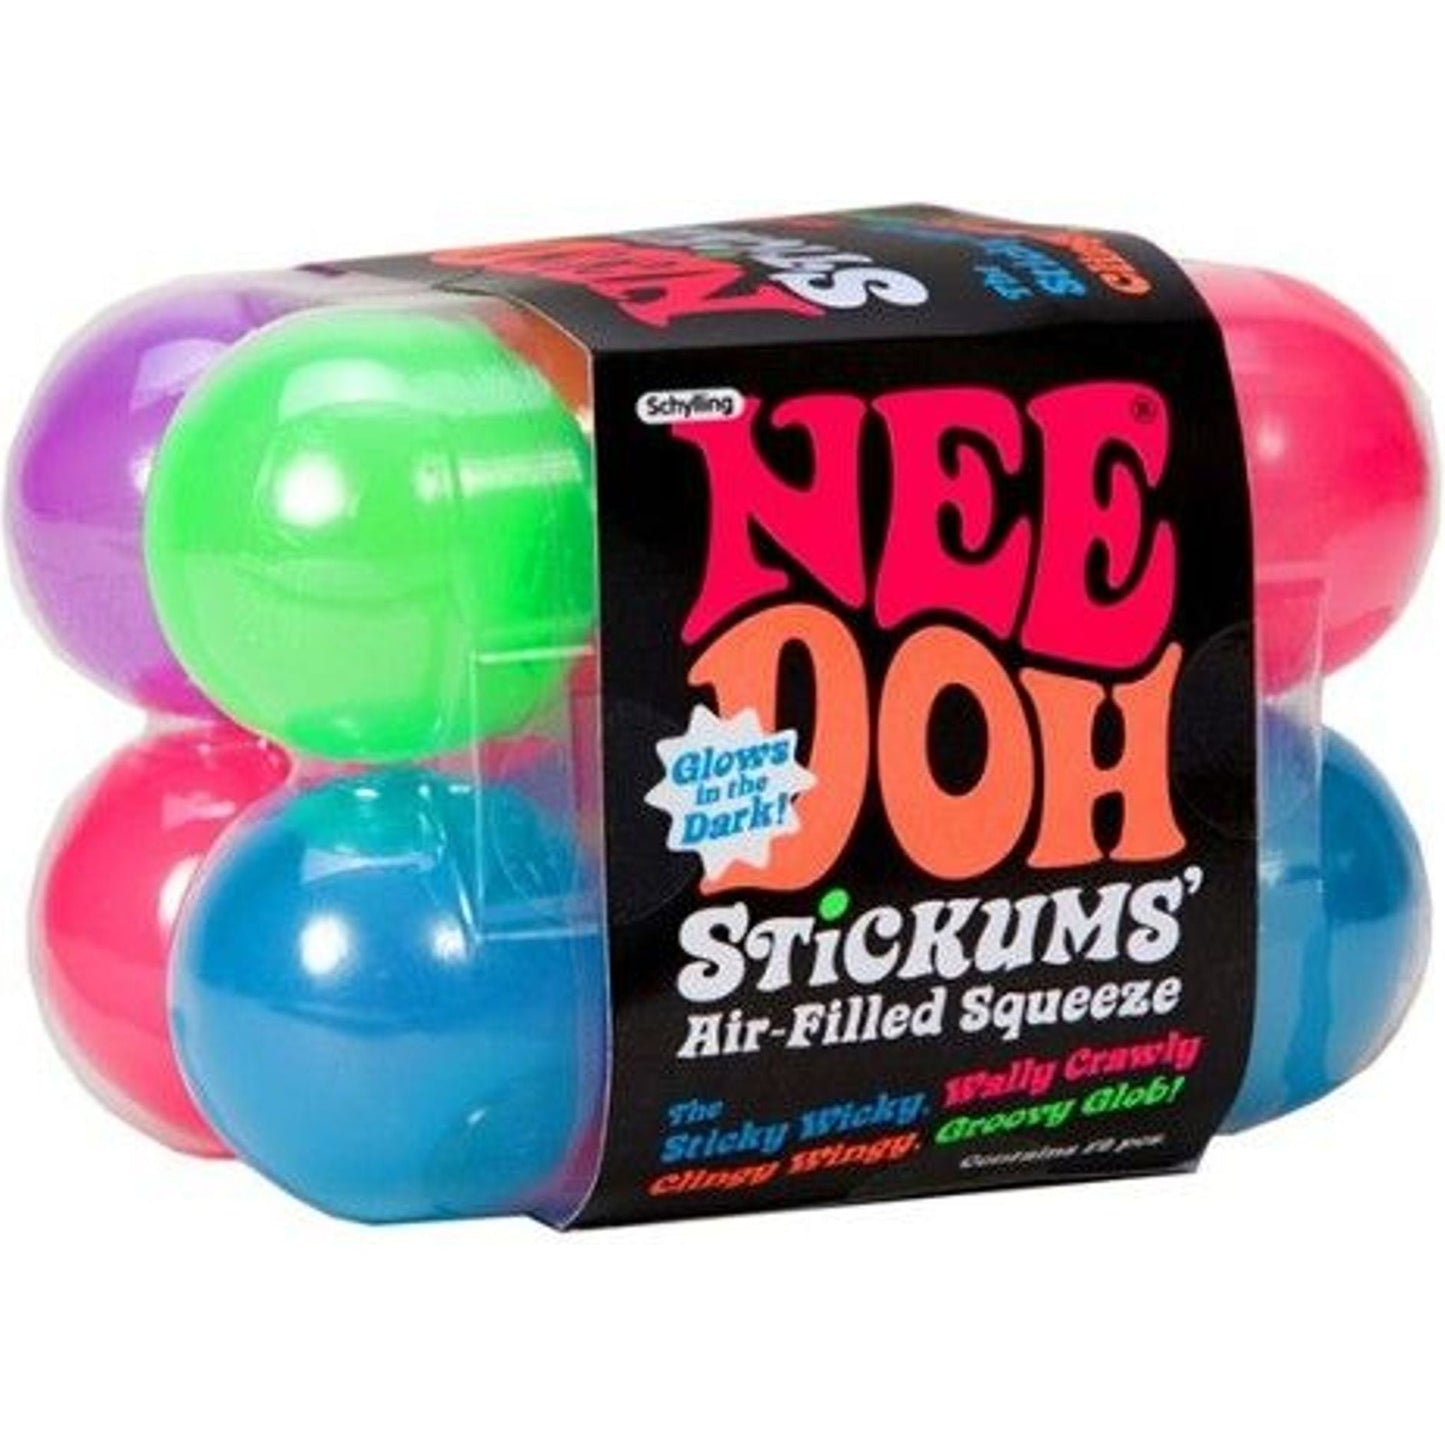 Stickums Nee Doh - Toybox Tales